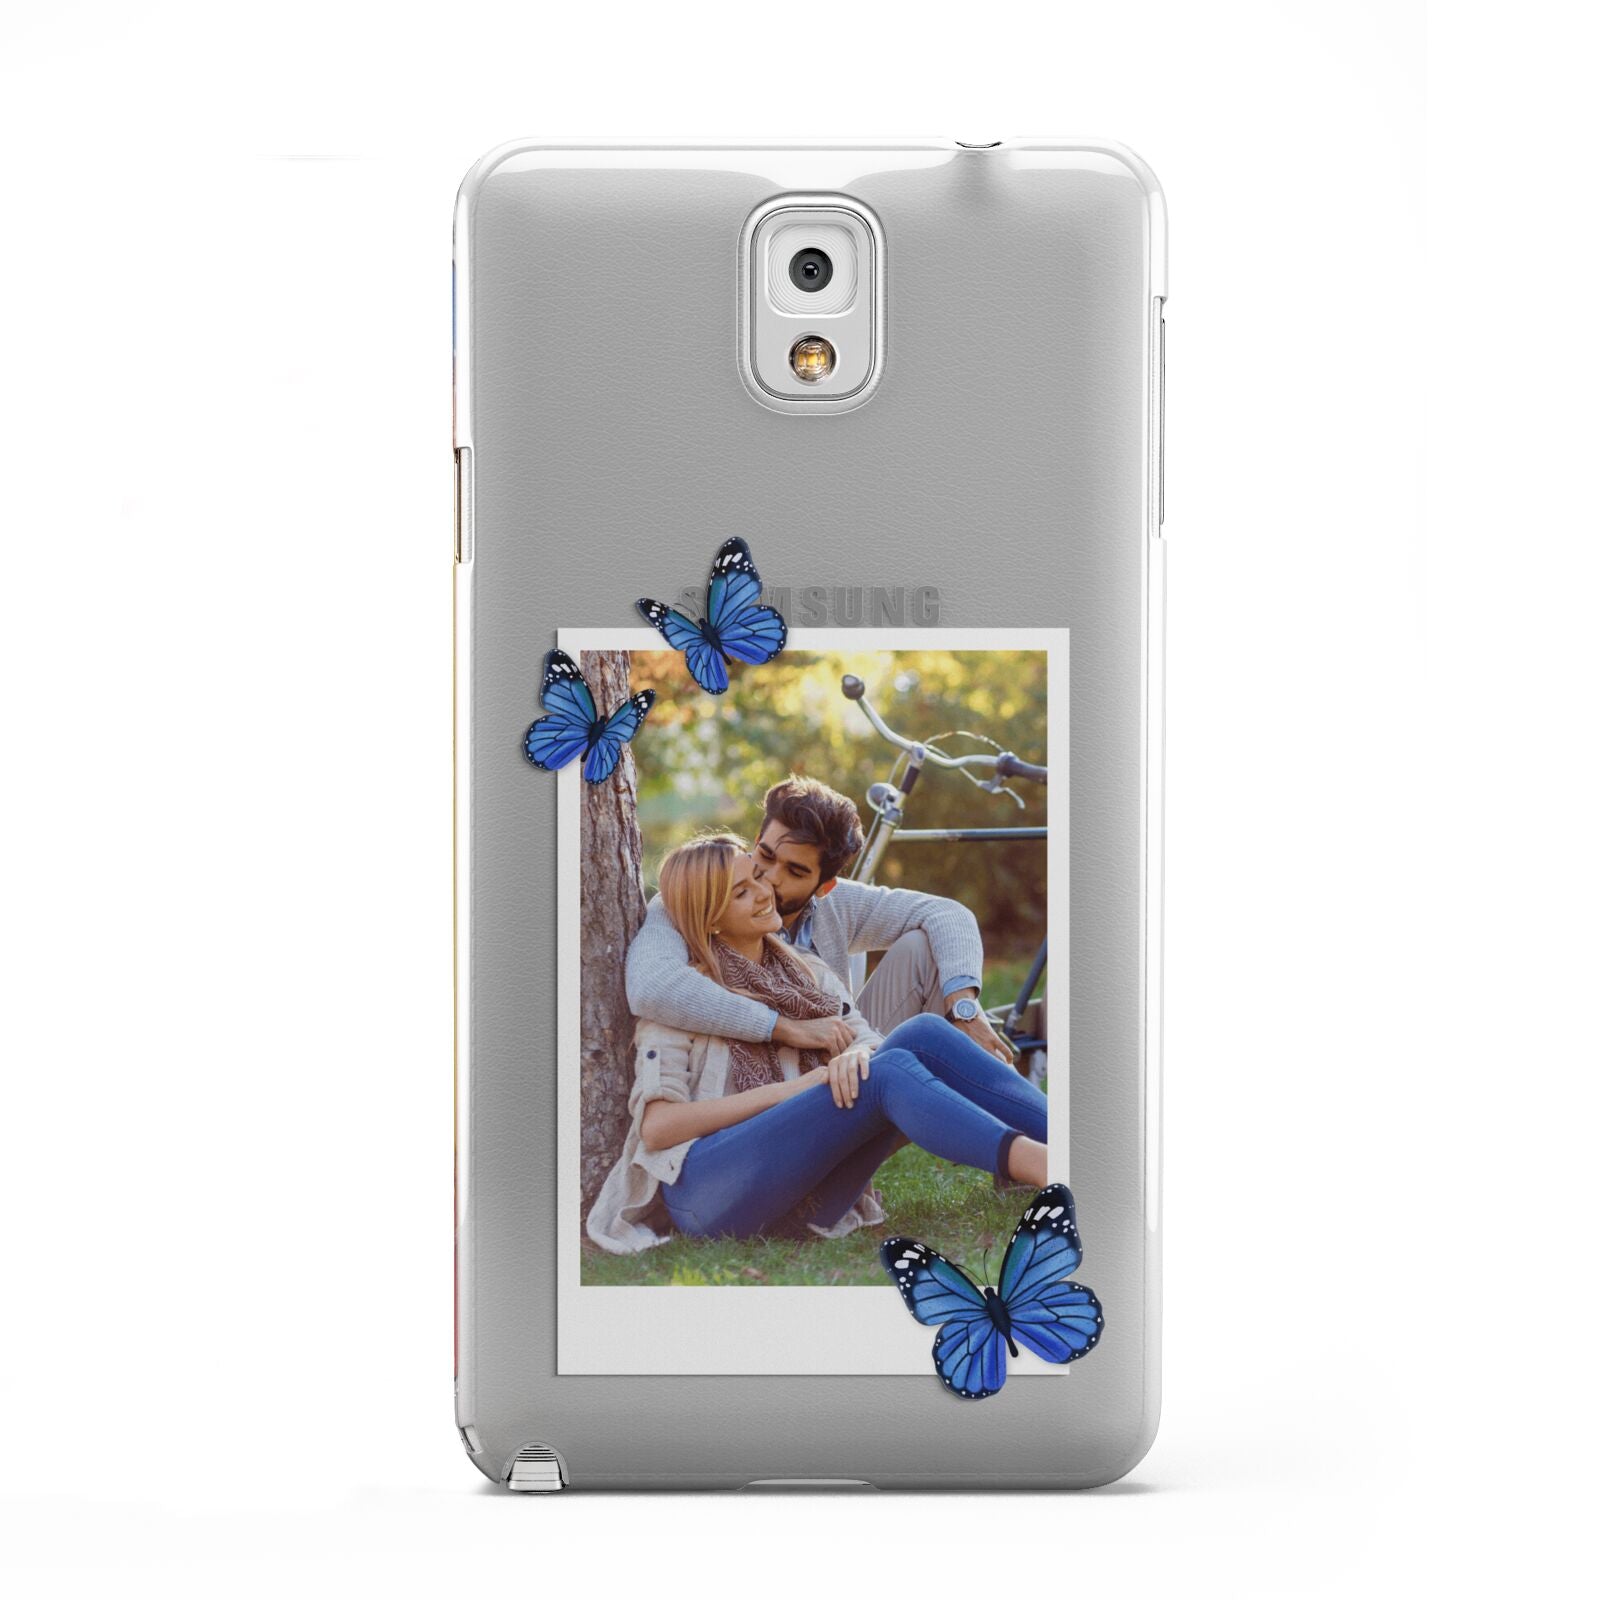 Polaroid Photo Samsung Galaxy Note 3 Case